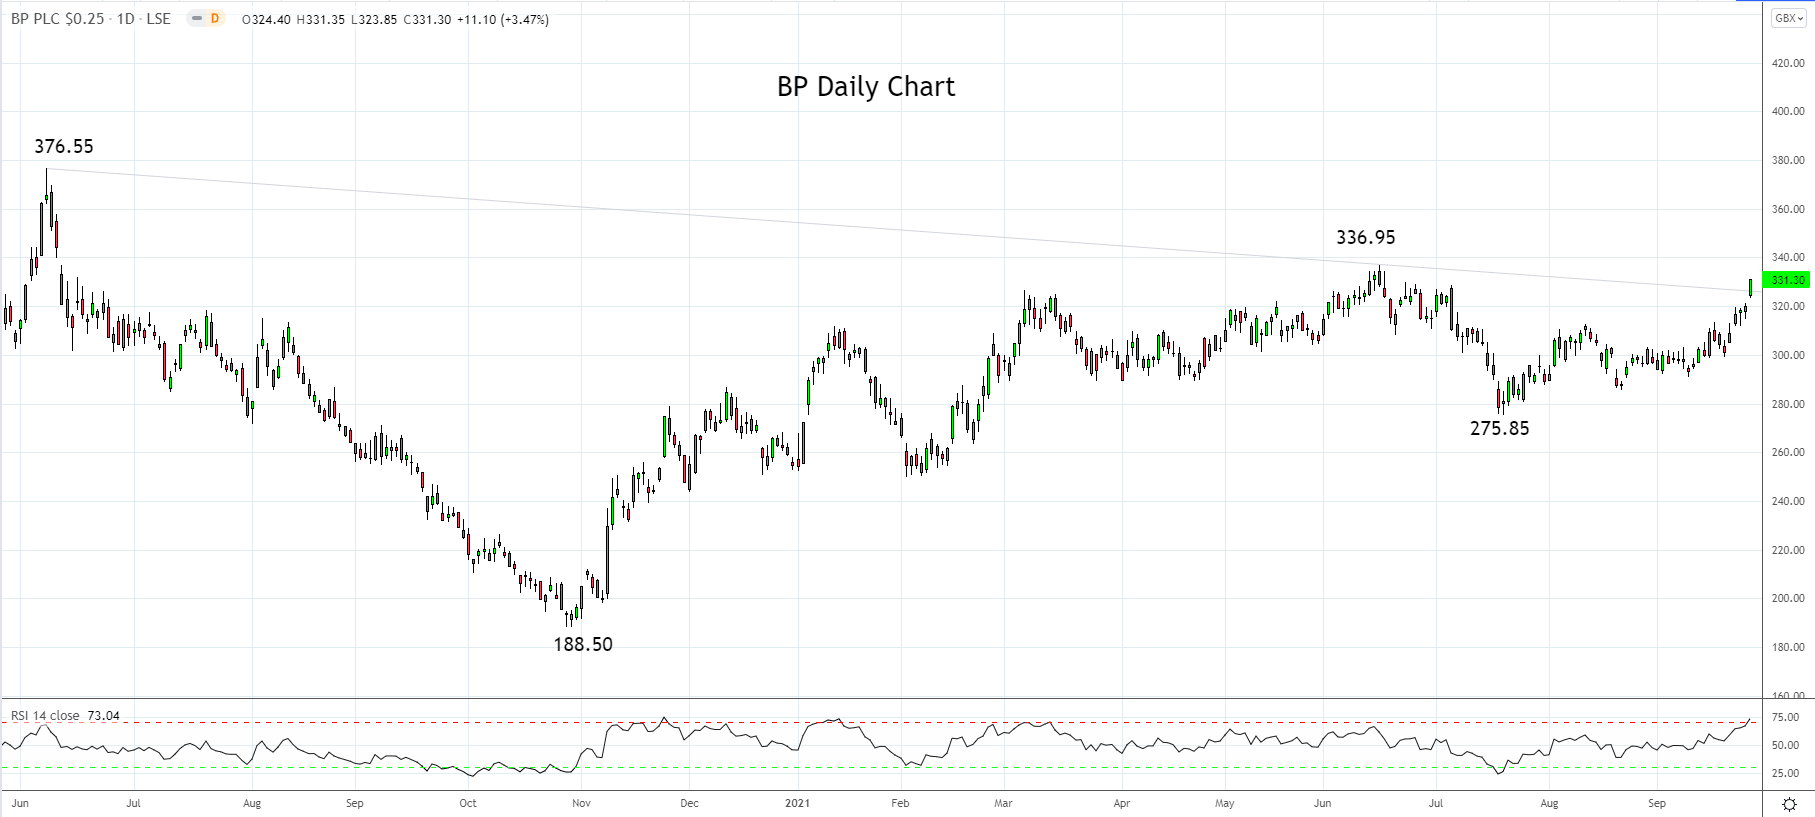 BP Daily chart